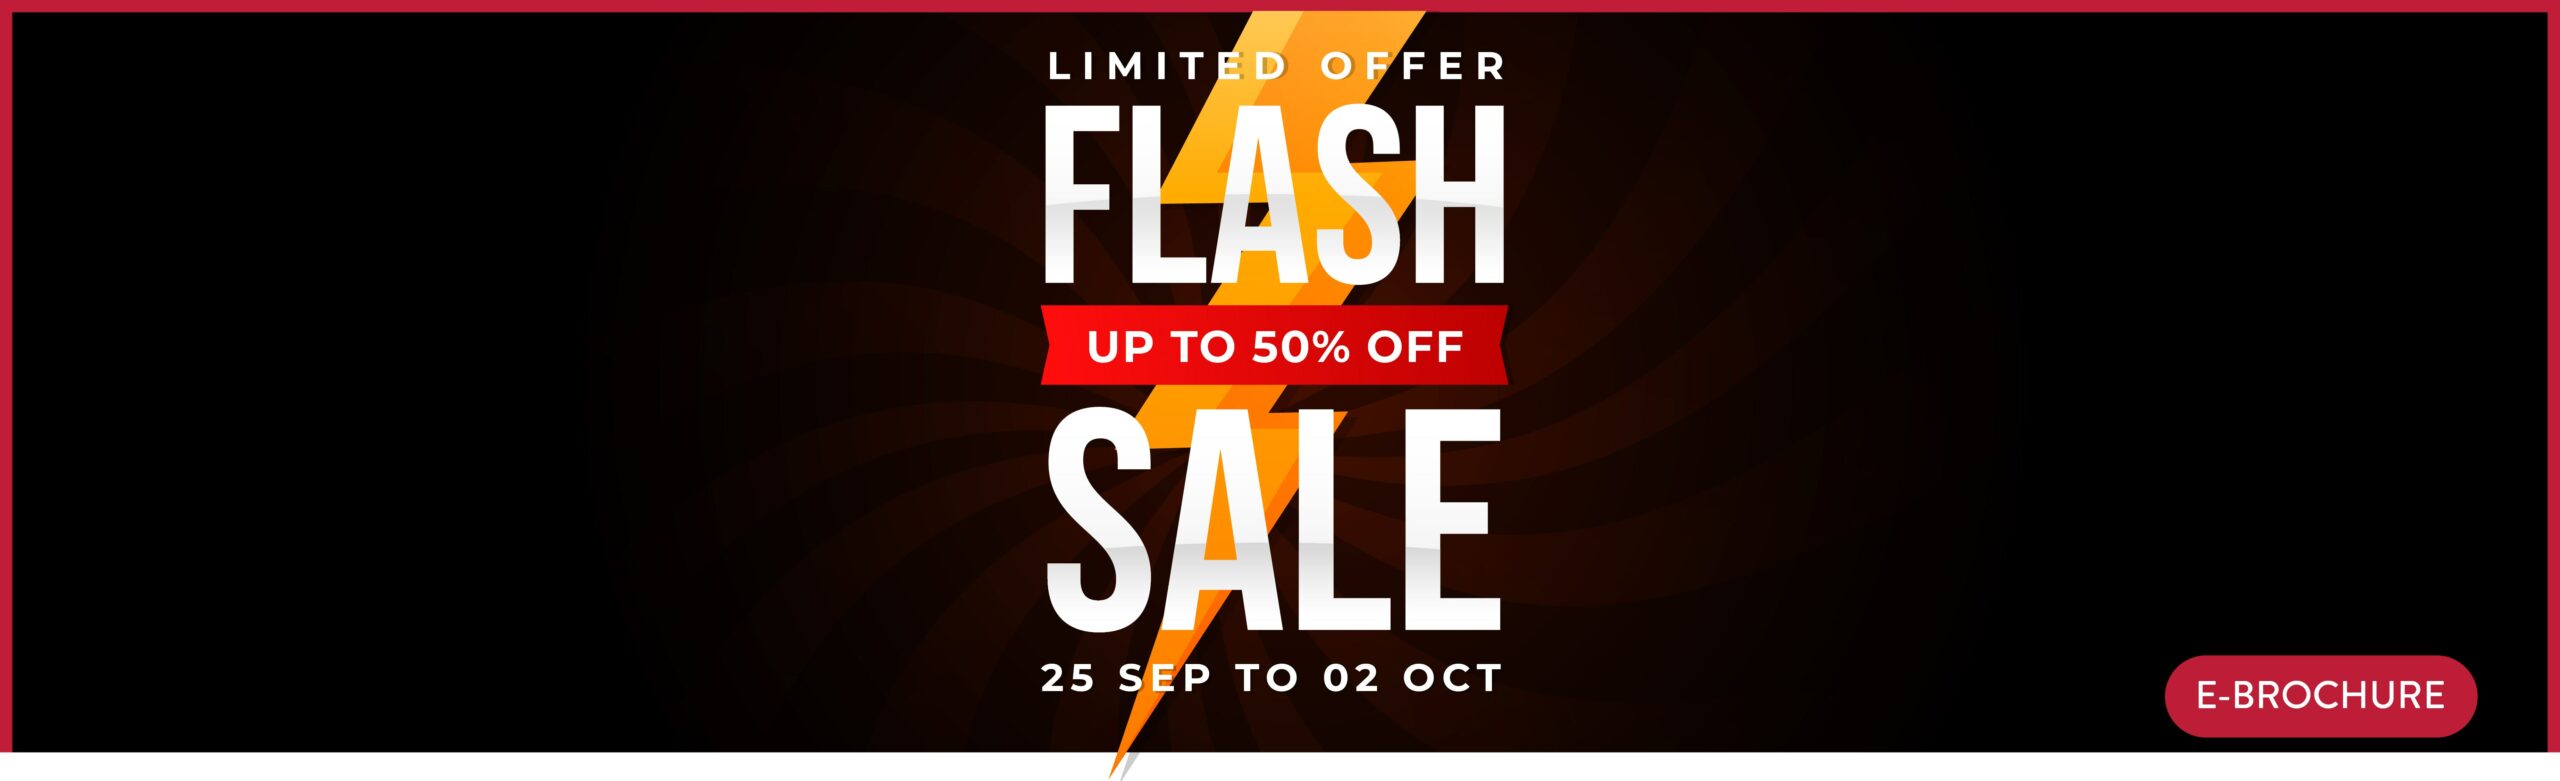 EBrochure Flash Sale Go Delivery Mauritius